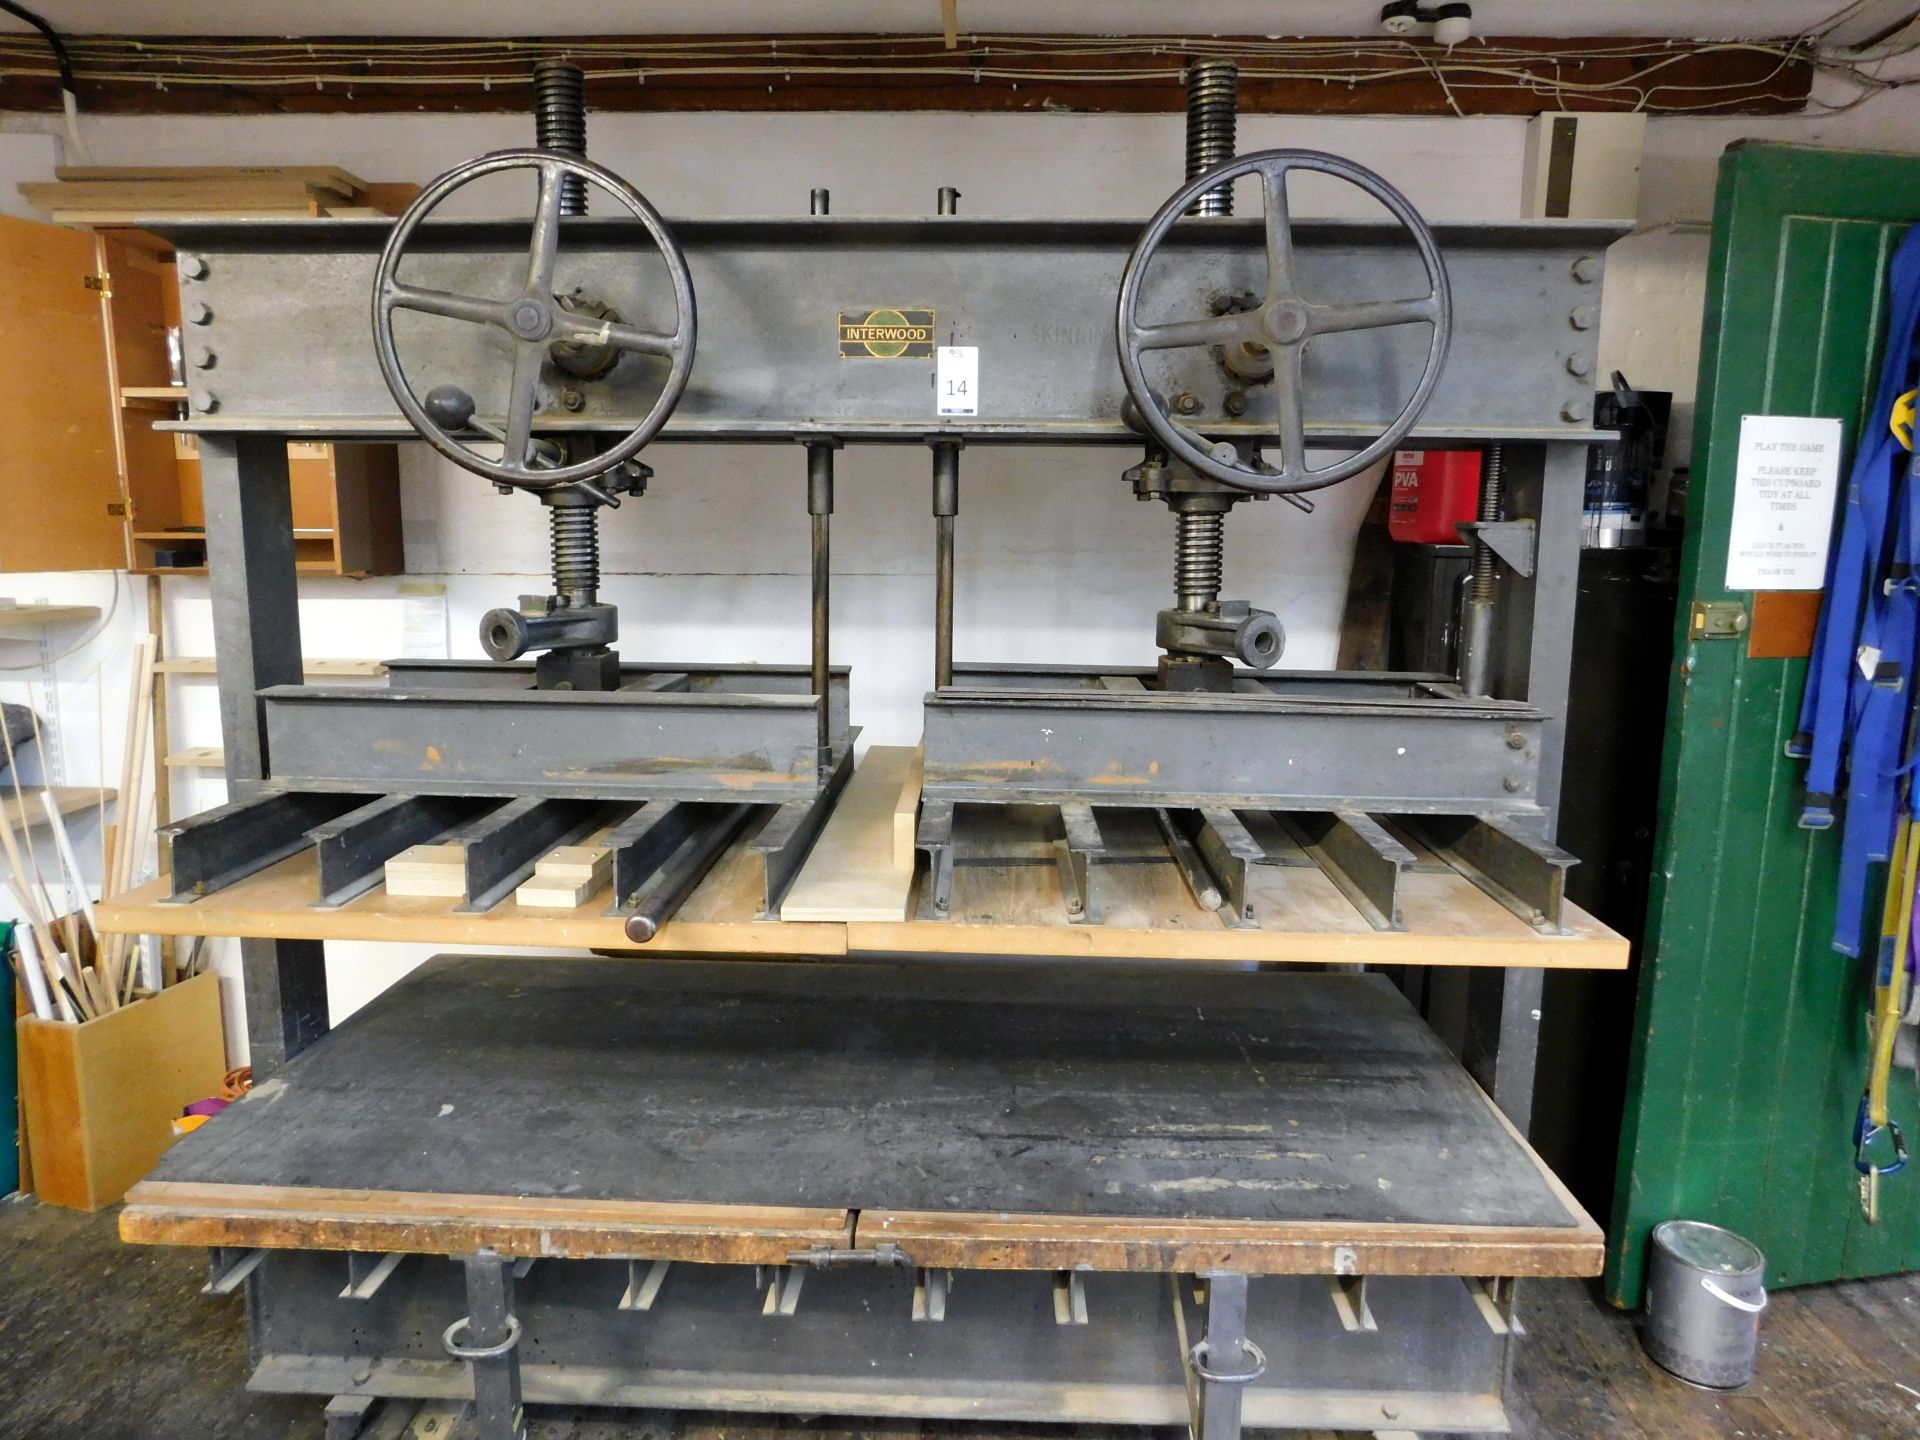 Interwood Skinnin Grove Manual Wood Forming Press (Located Bethnal Green – Please see General